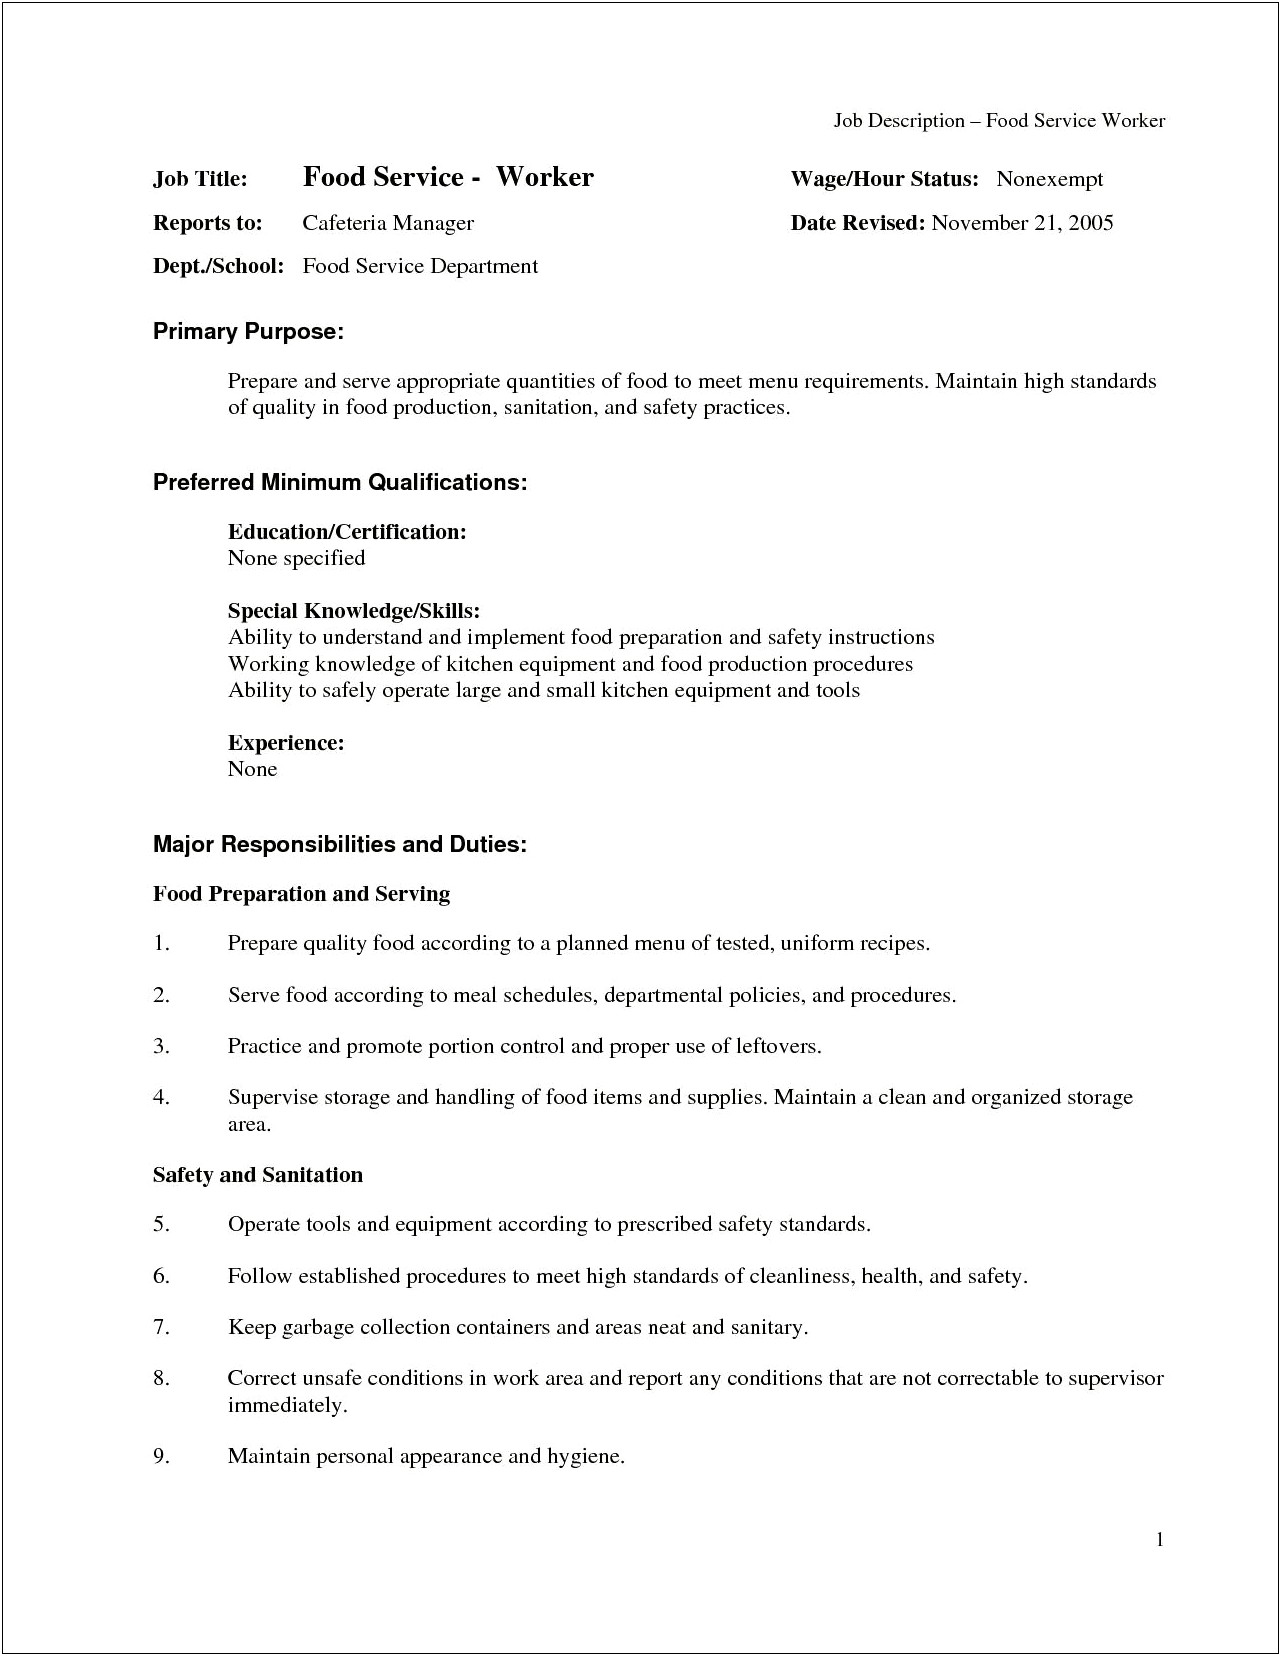 Fast Food Employee Job Description Resume